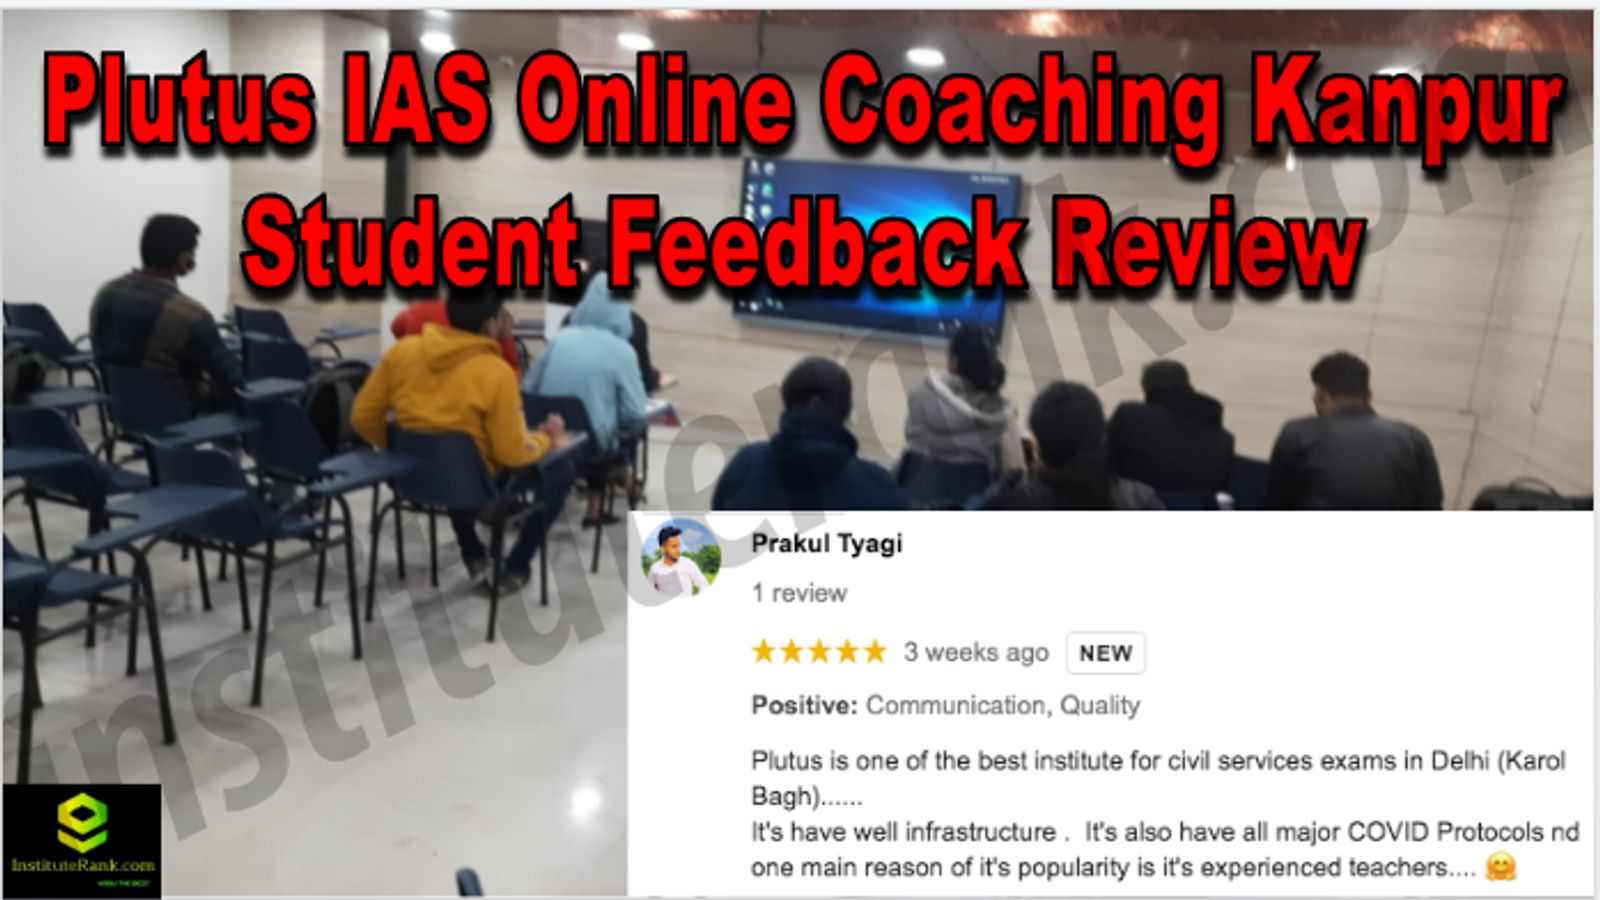 Plutus IAS Online Coaching Kanpur Student Feedback Reviews